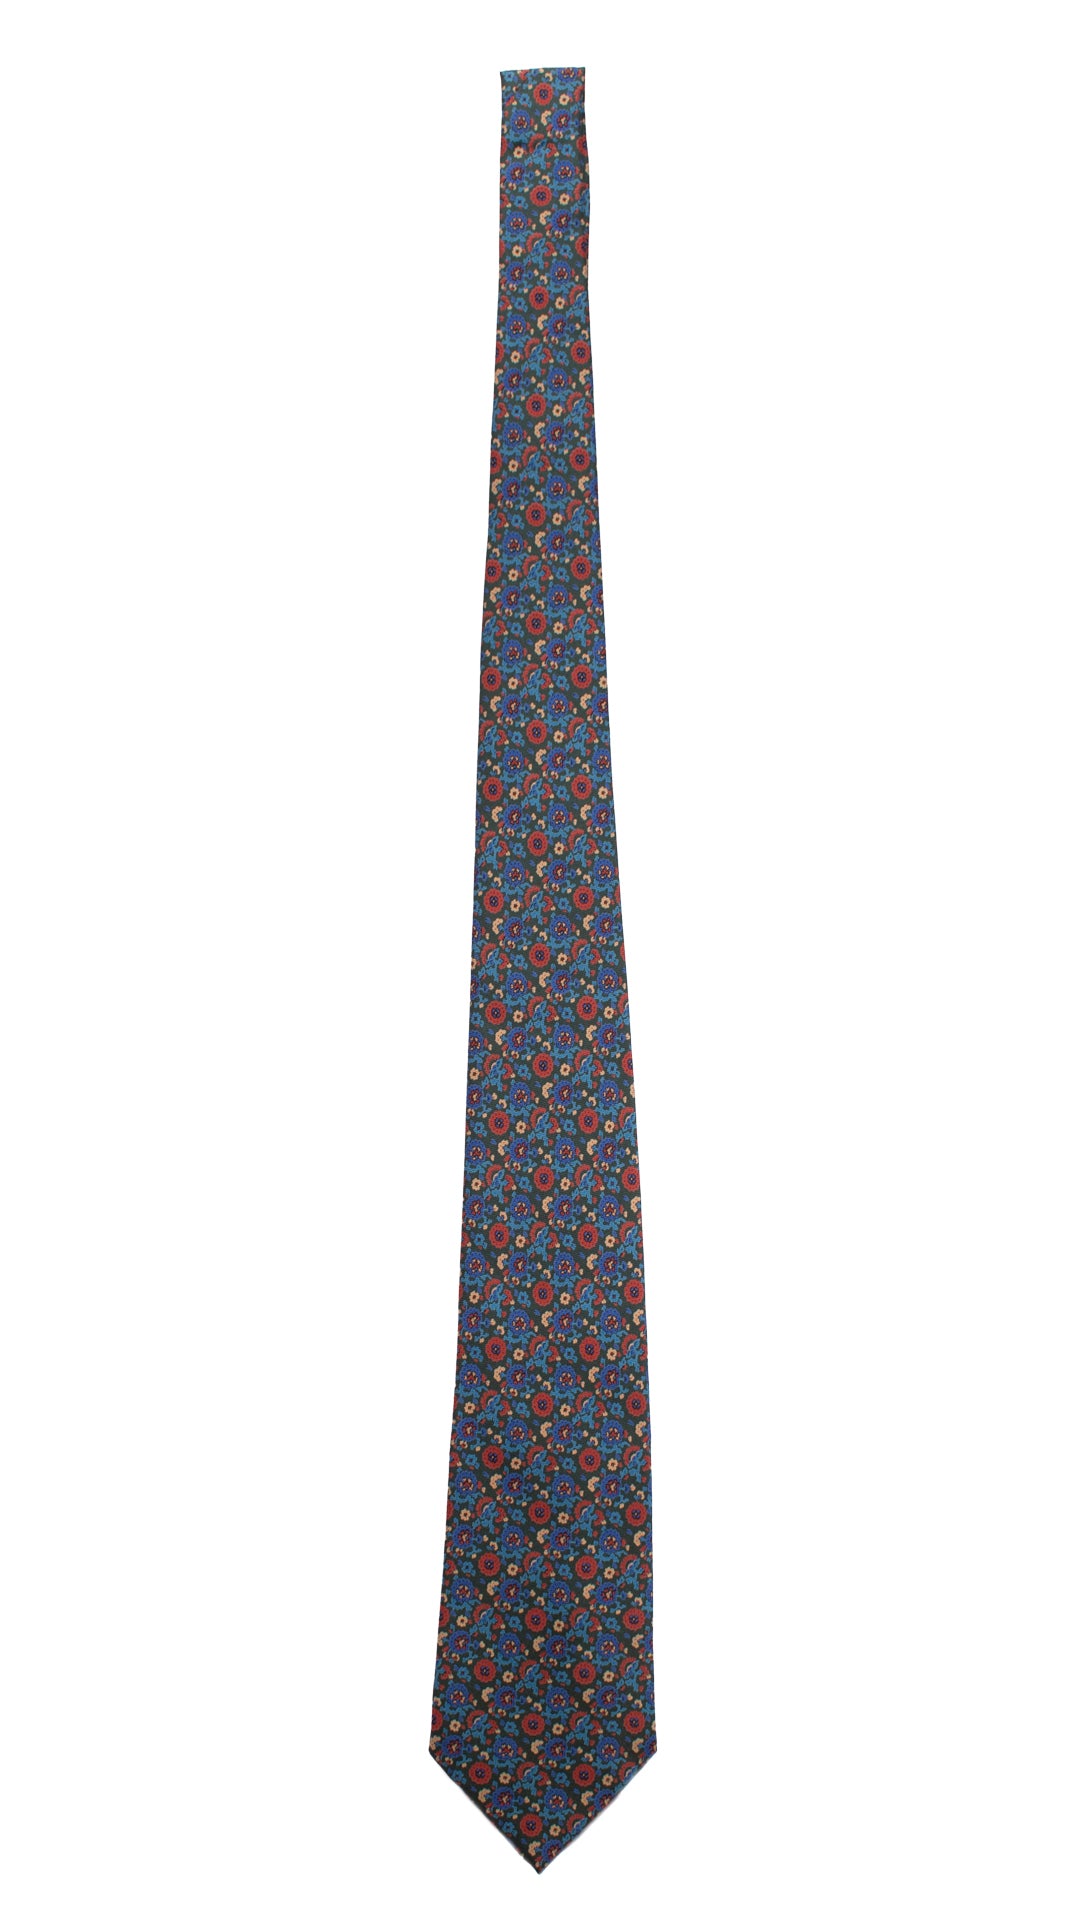 Cravatta Vintage in Twill di Seta Verde A Fiori Blu Celesti Rossi CV766 Intera